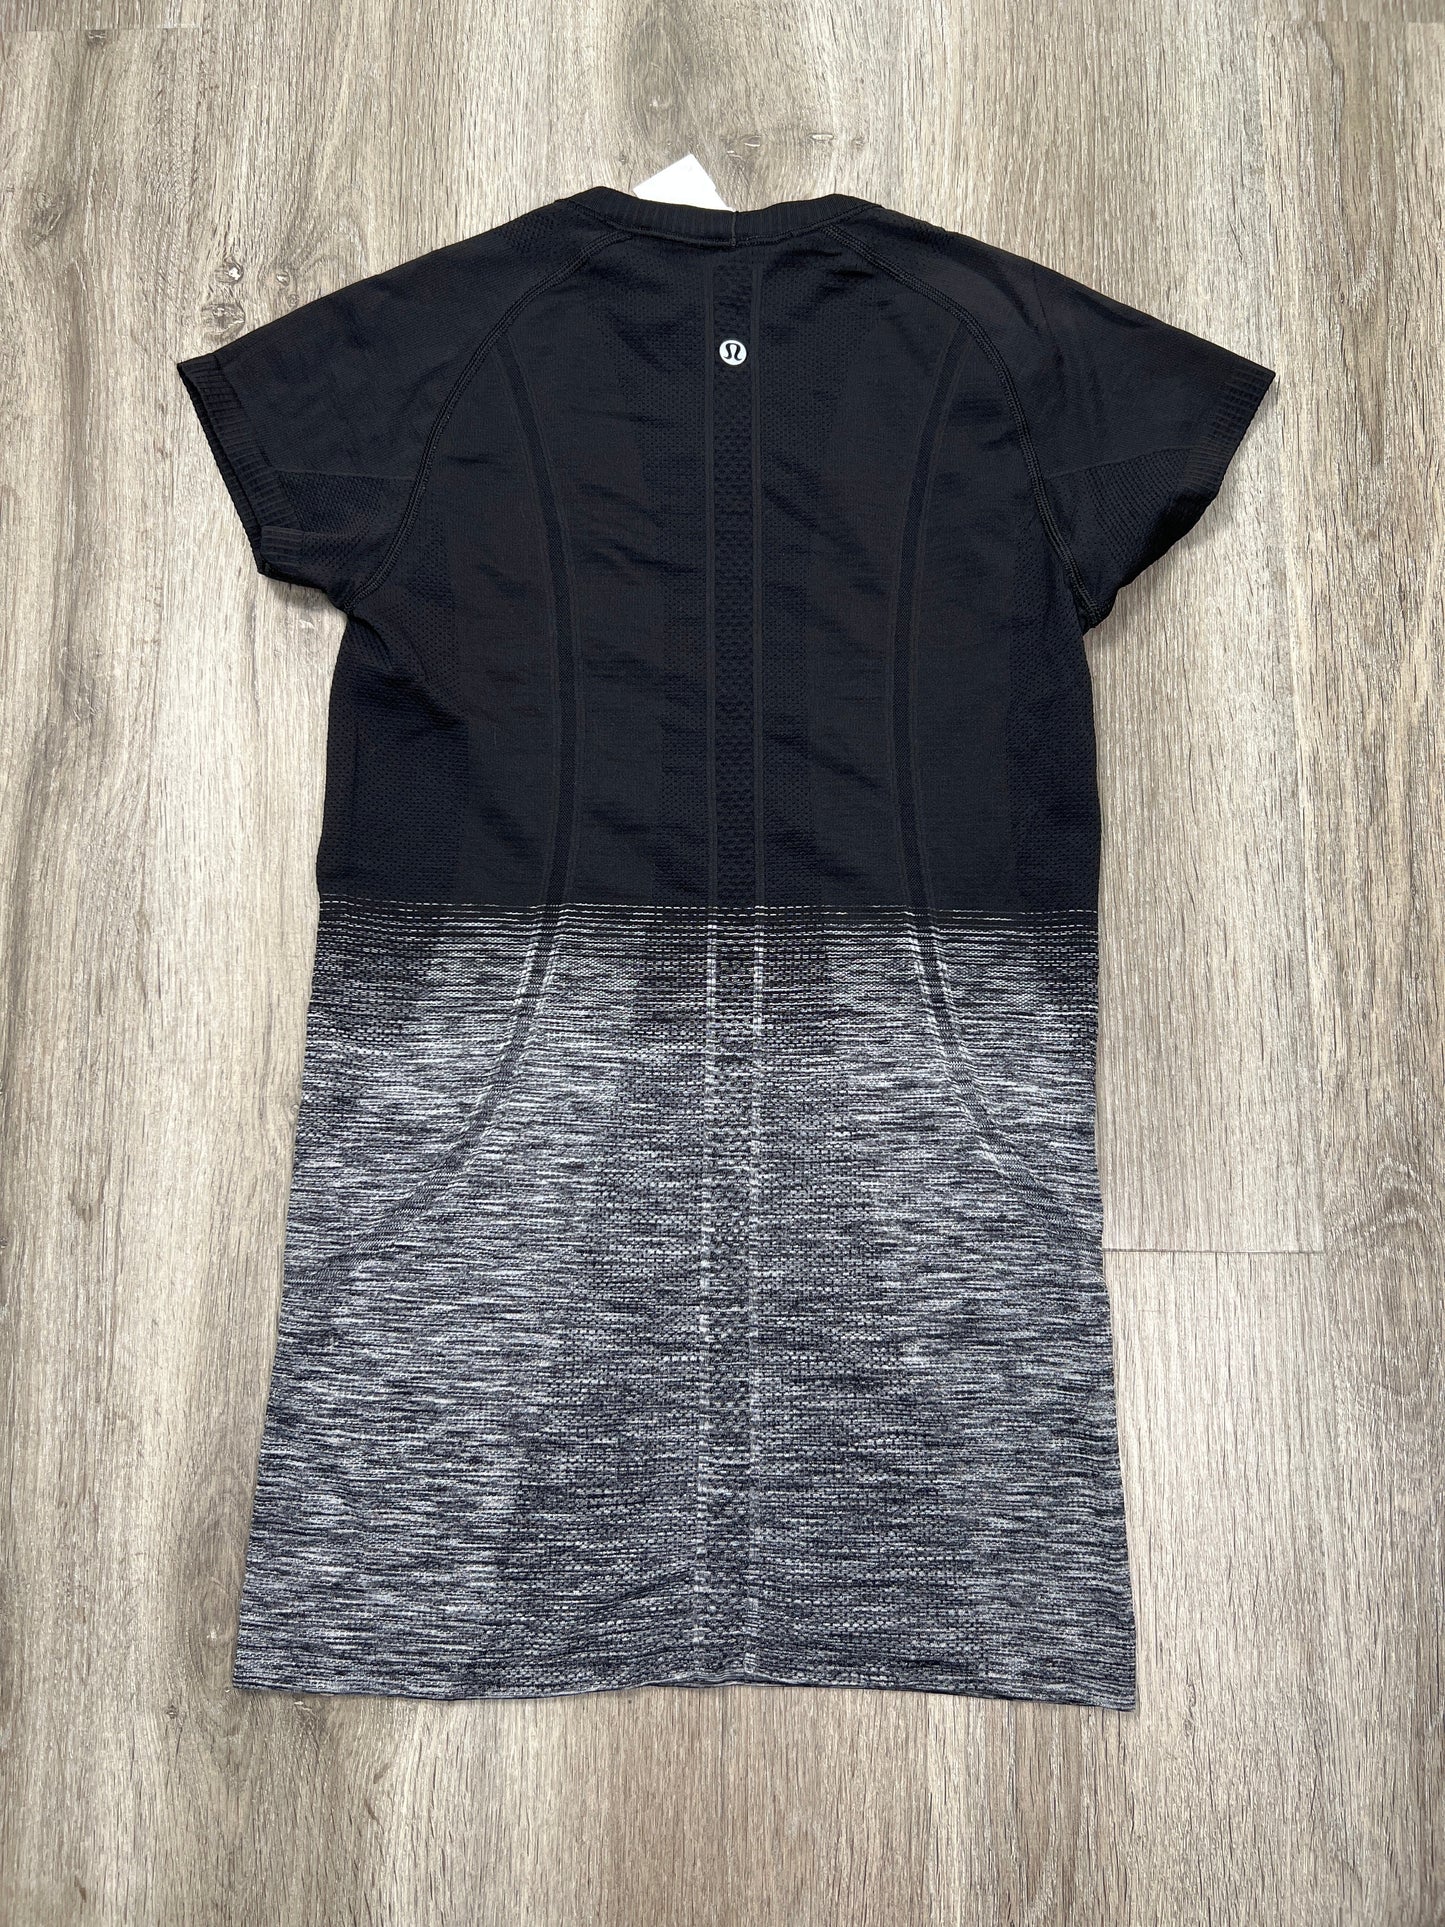 Black & Grey Athletic Top Short Sleeve Lululemon, Size S